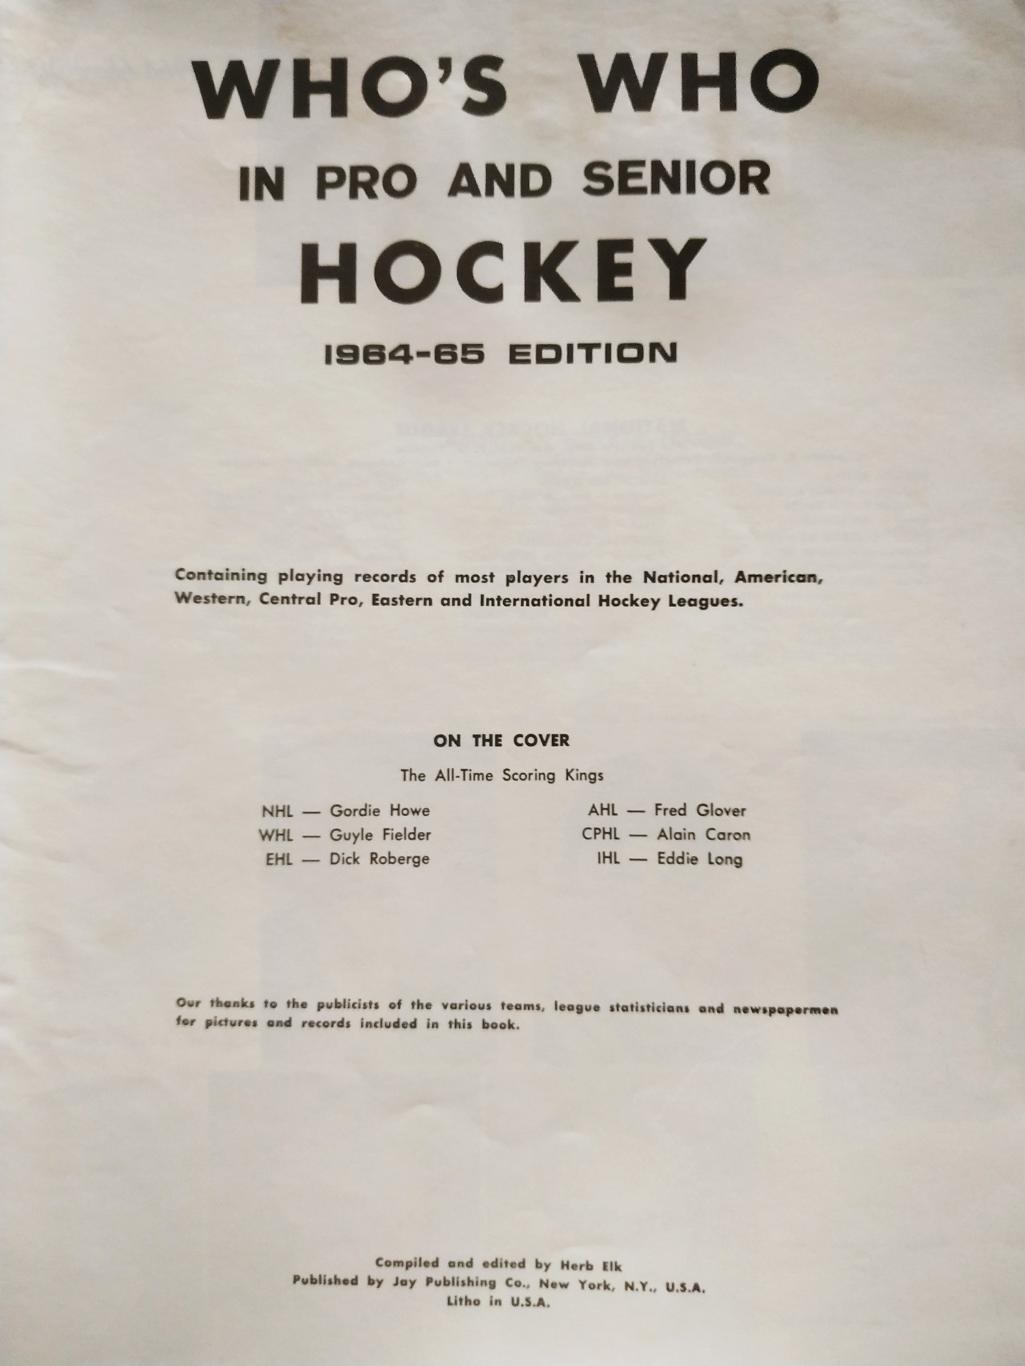 ХОККЕЙ ЖУРНАЛ КТО ЕСТЬ КТО В ХОККЕЕ НХЛ NHL 1964-65 WHOS WHO IN PRO HOCKEY 1